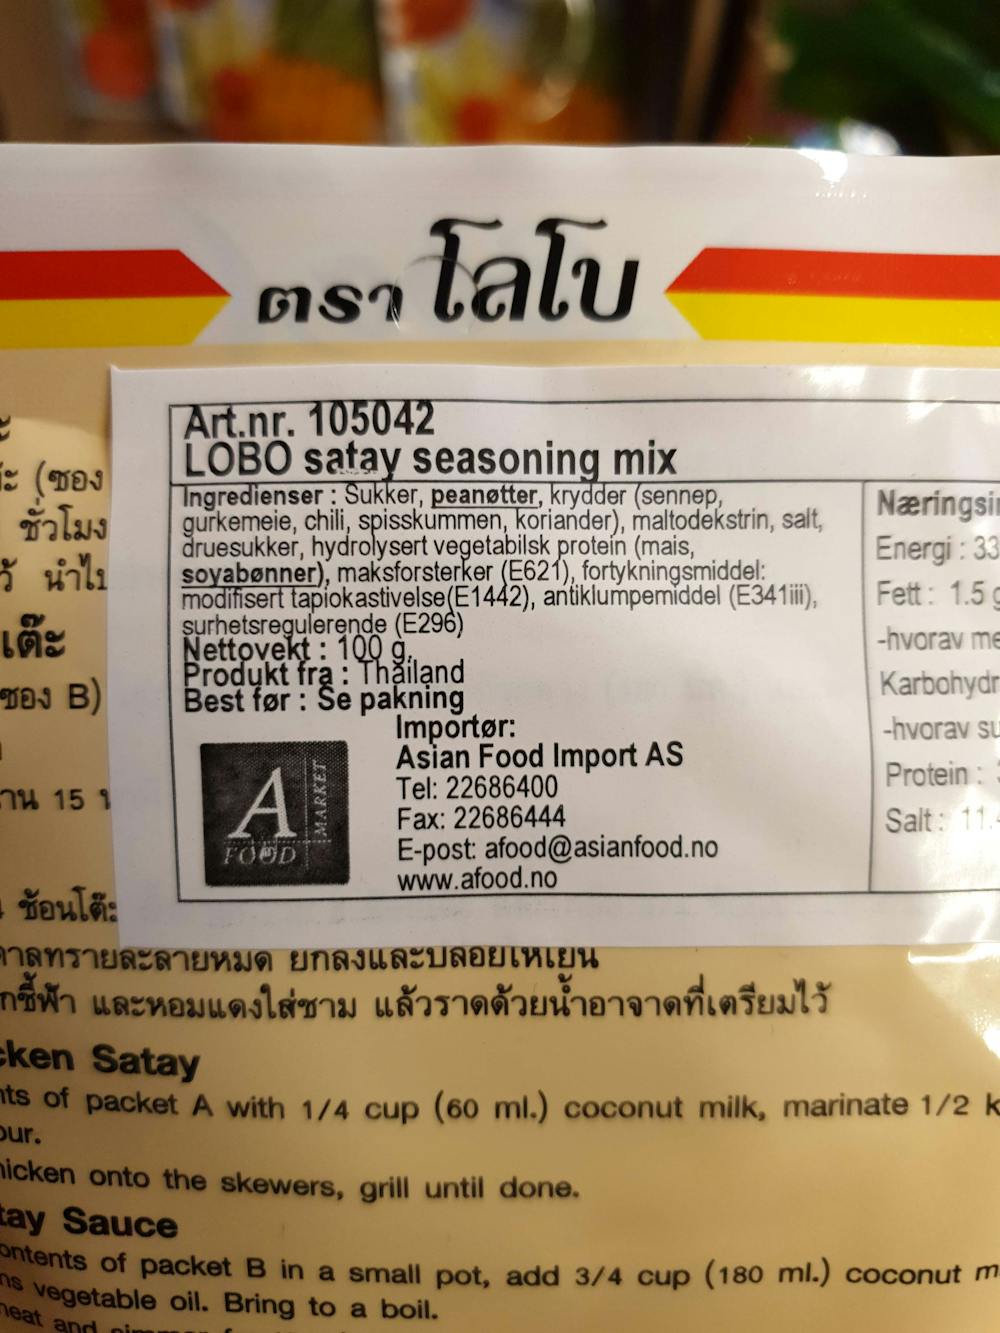 Ingredienslisten til Satay seasoning mix, Lobo